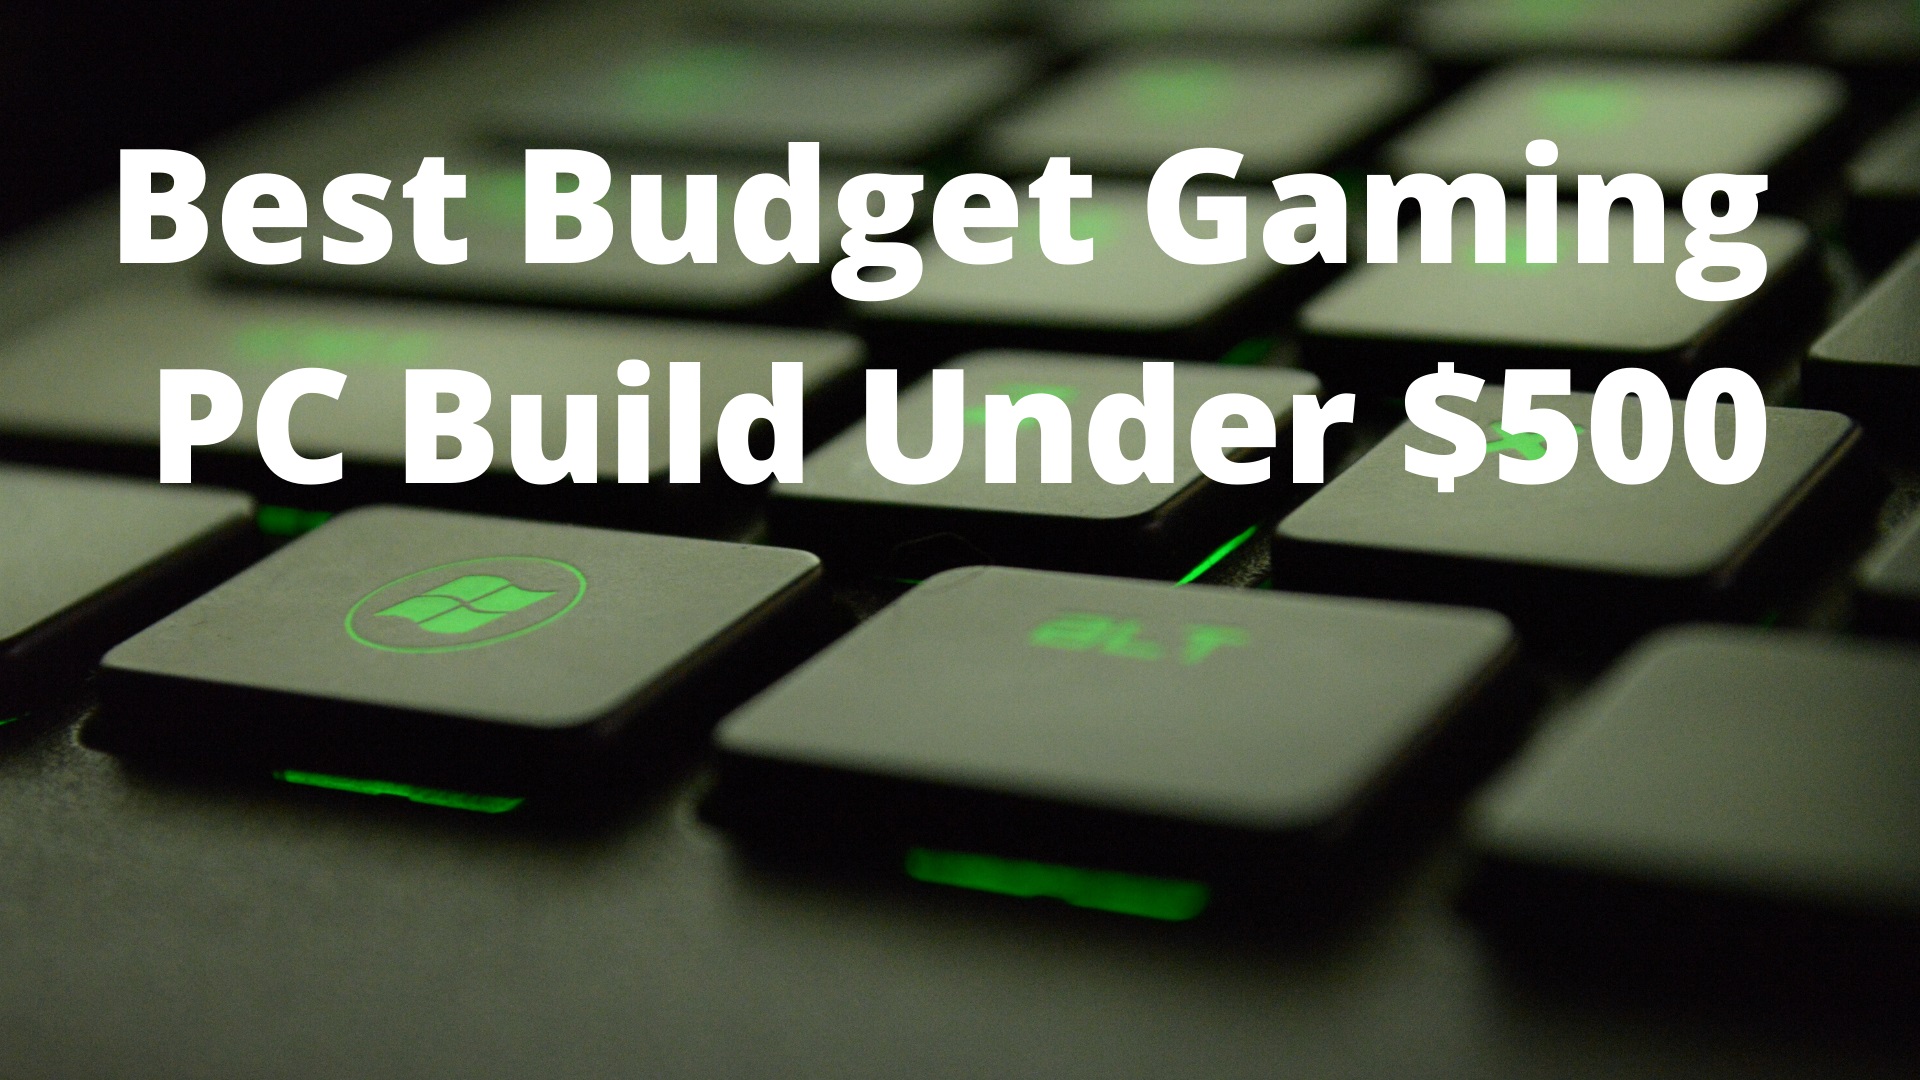 Best Budget Gaming PC Build Under $500